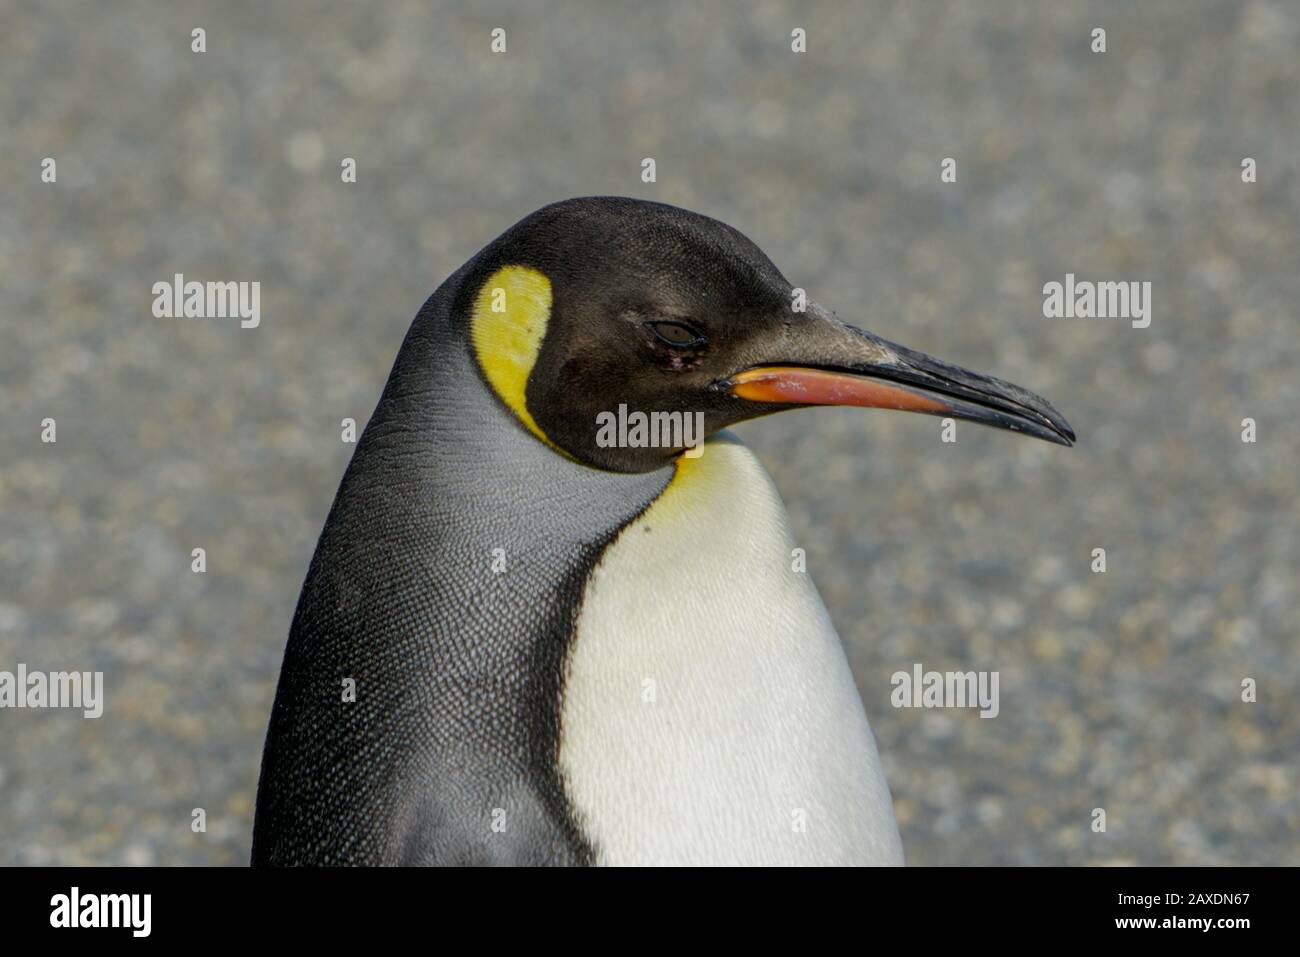 King penguins of South Georgia Stock Photo